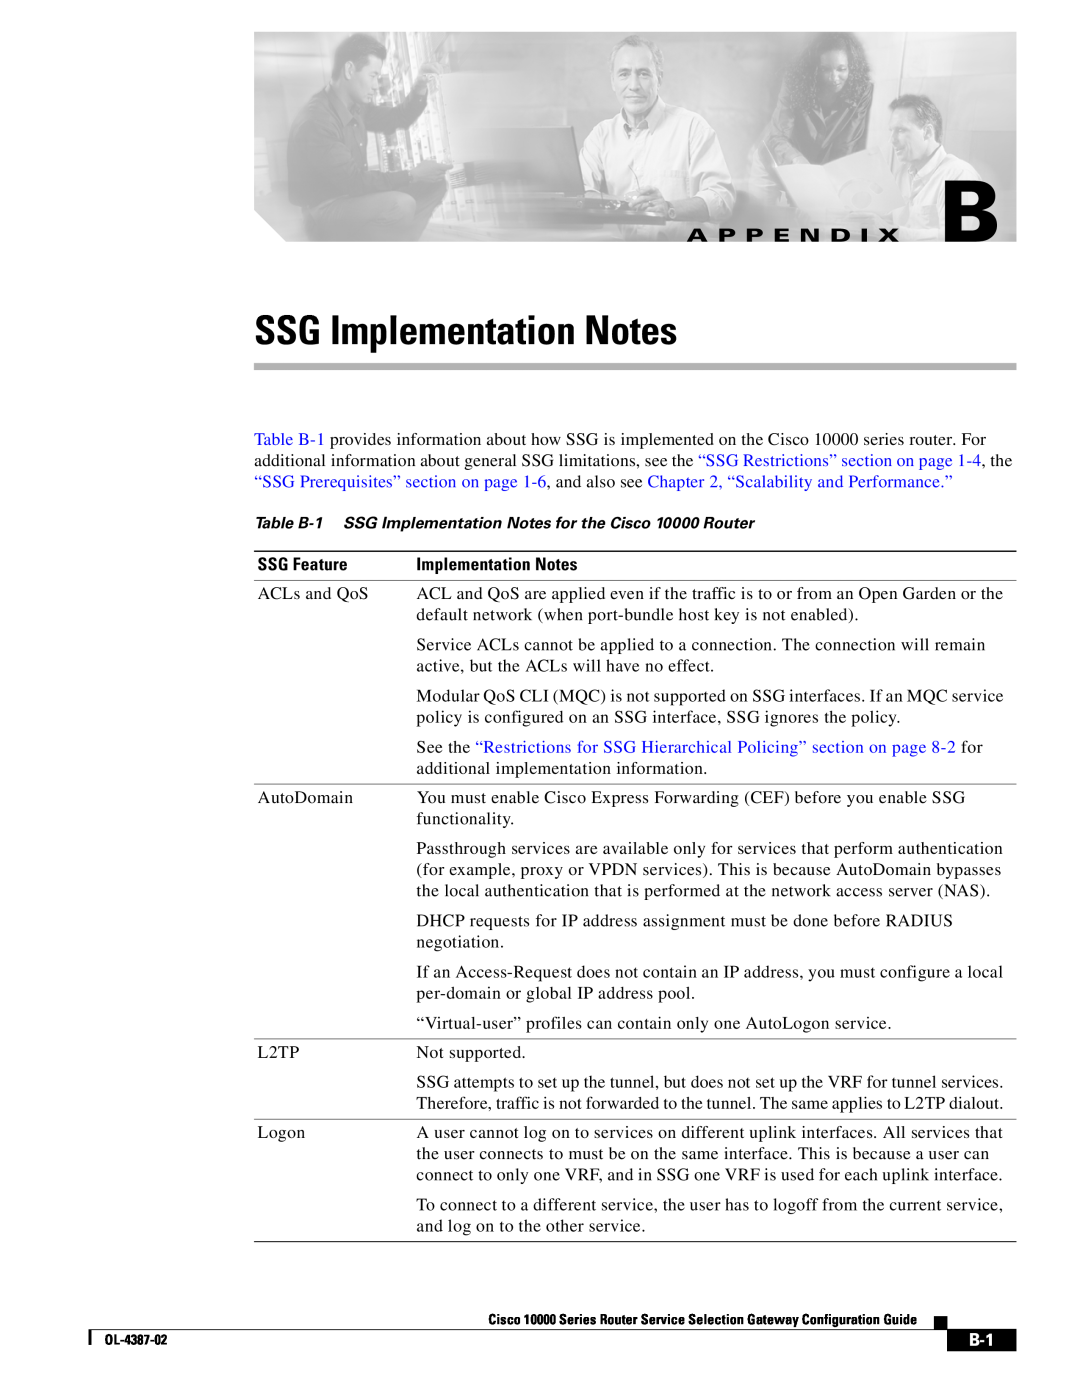 Cisco Systems OL-4387-02 manual SSG Implementation Notes, A P P E N D I X B, SSG Feature 